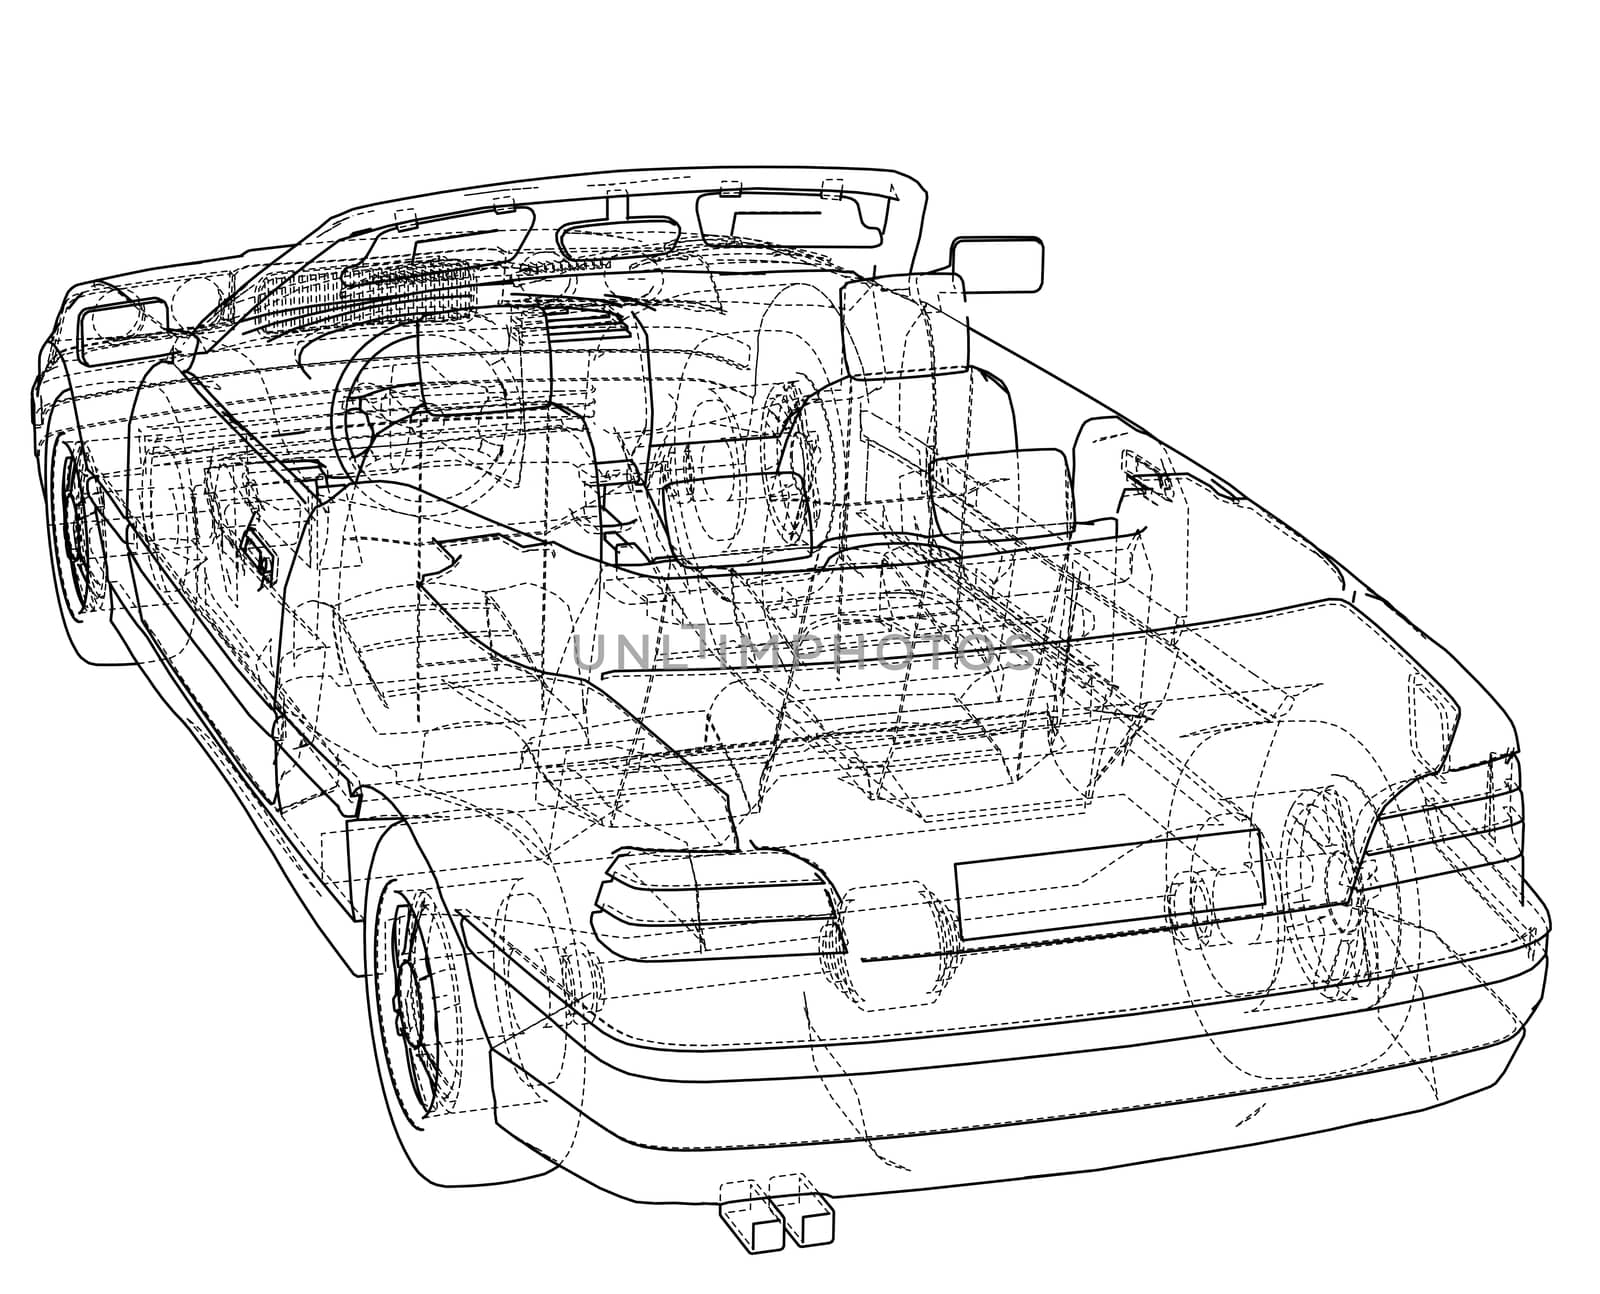 Car cabriolet concept. 3d illustration by cherezoff